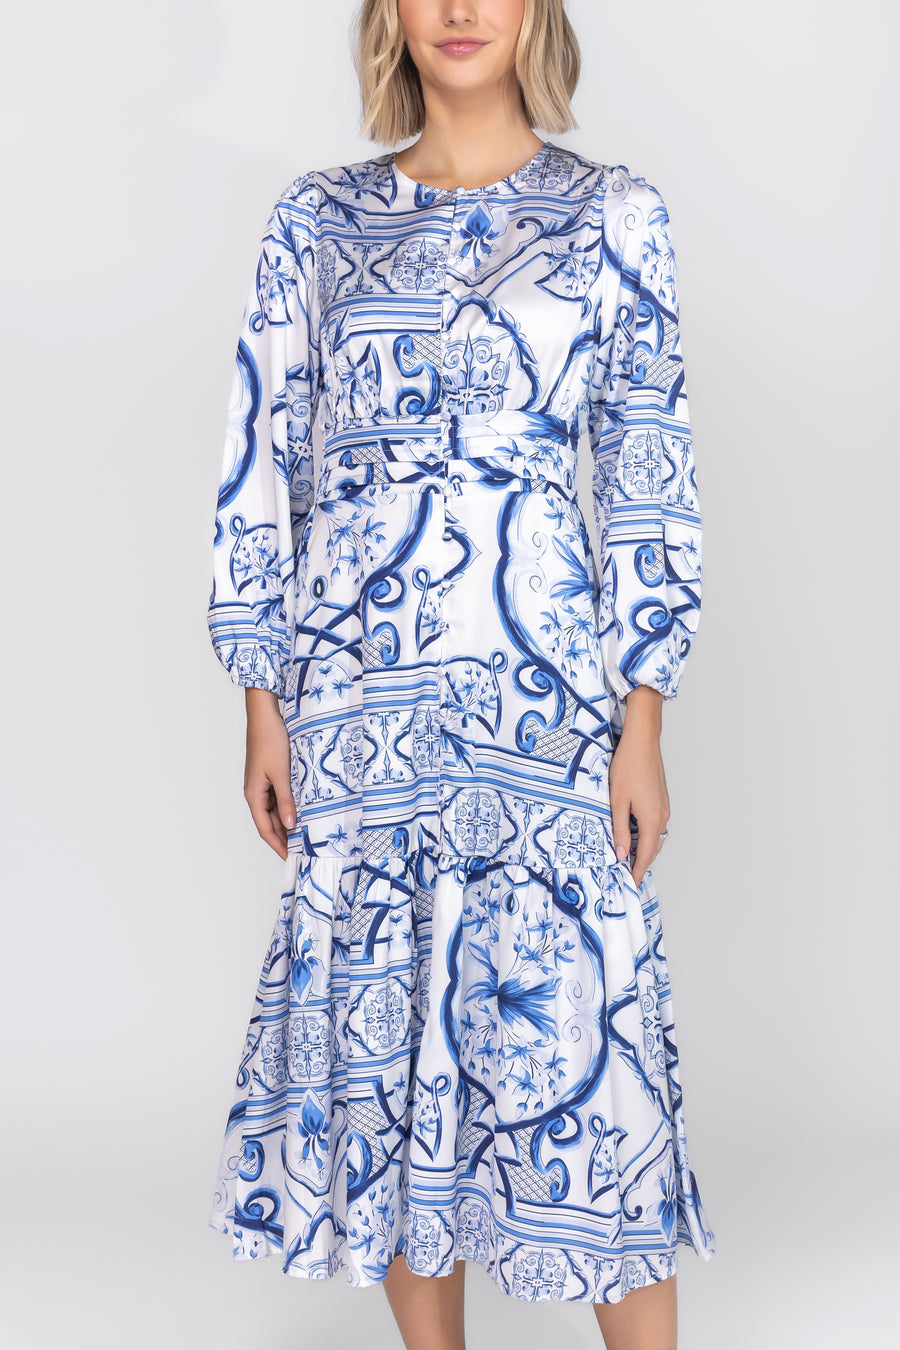 GWENYTH DRESS (WHITE/BLUE)